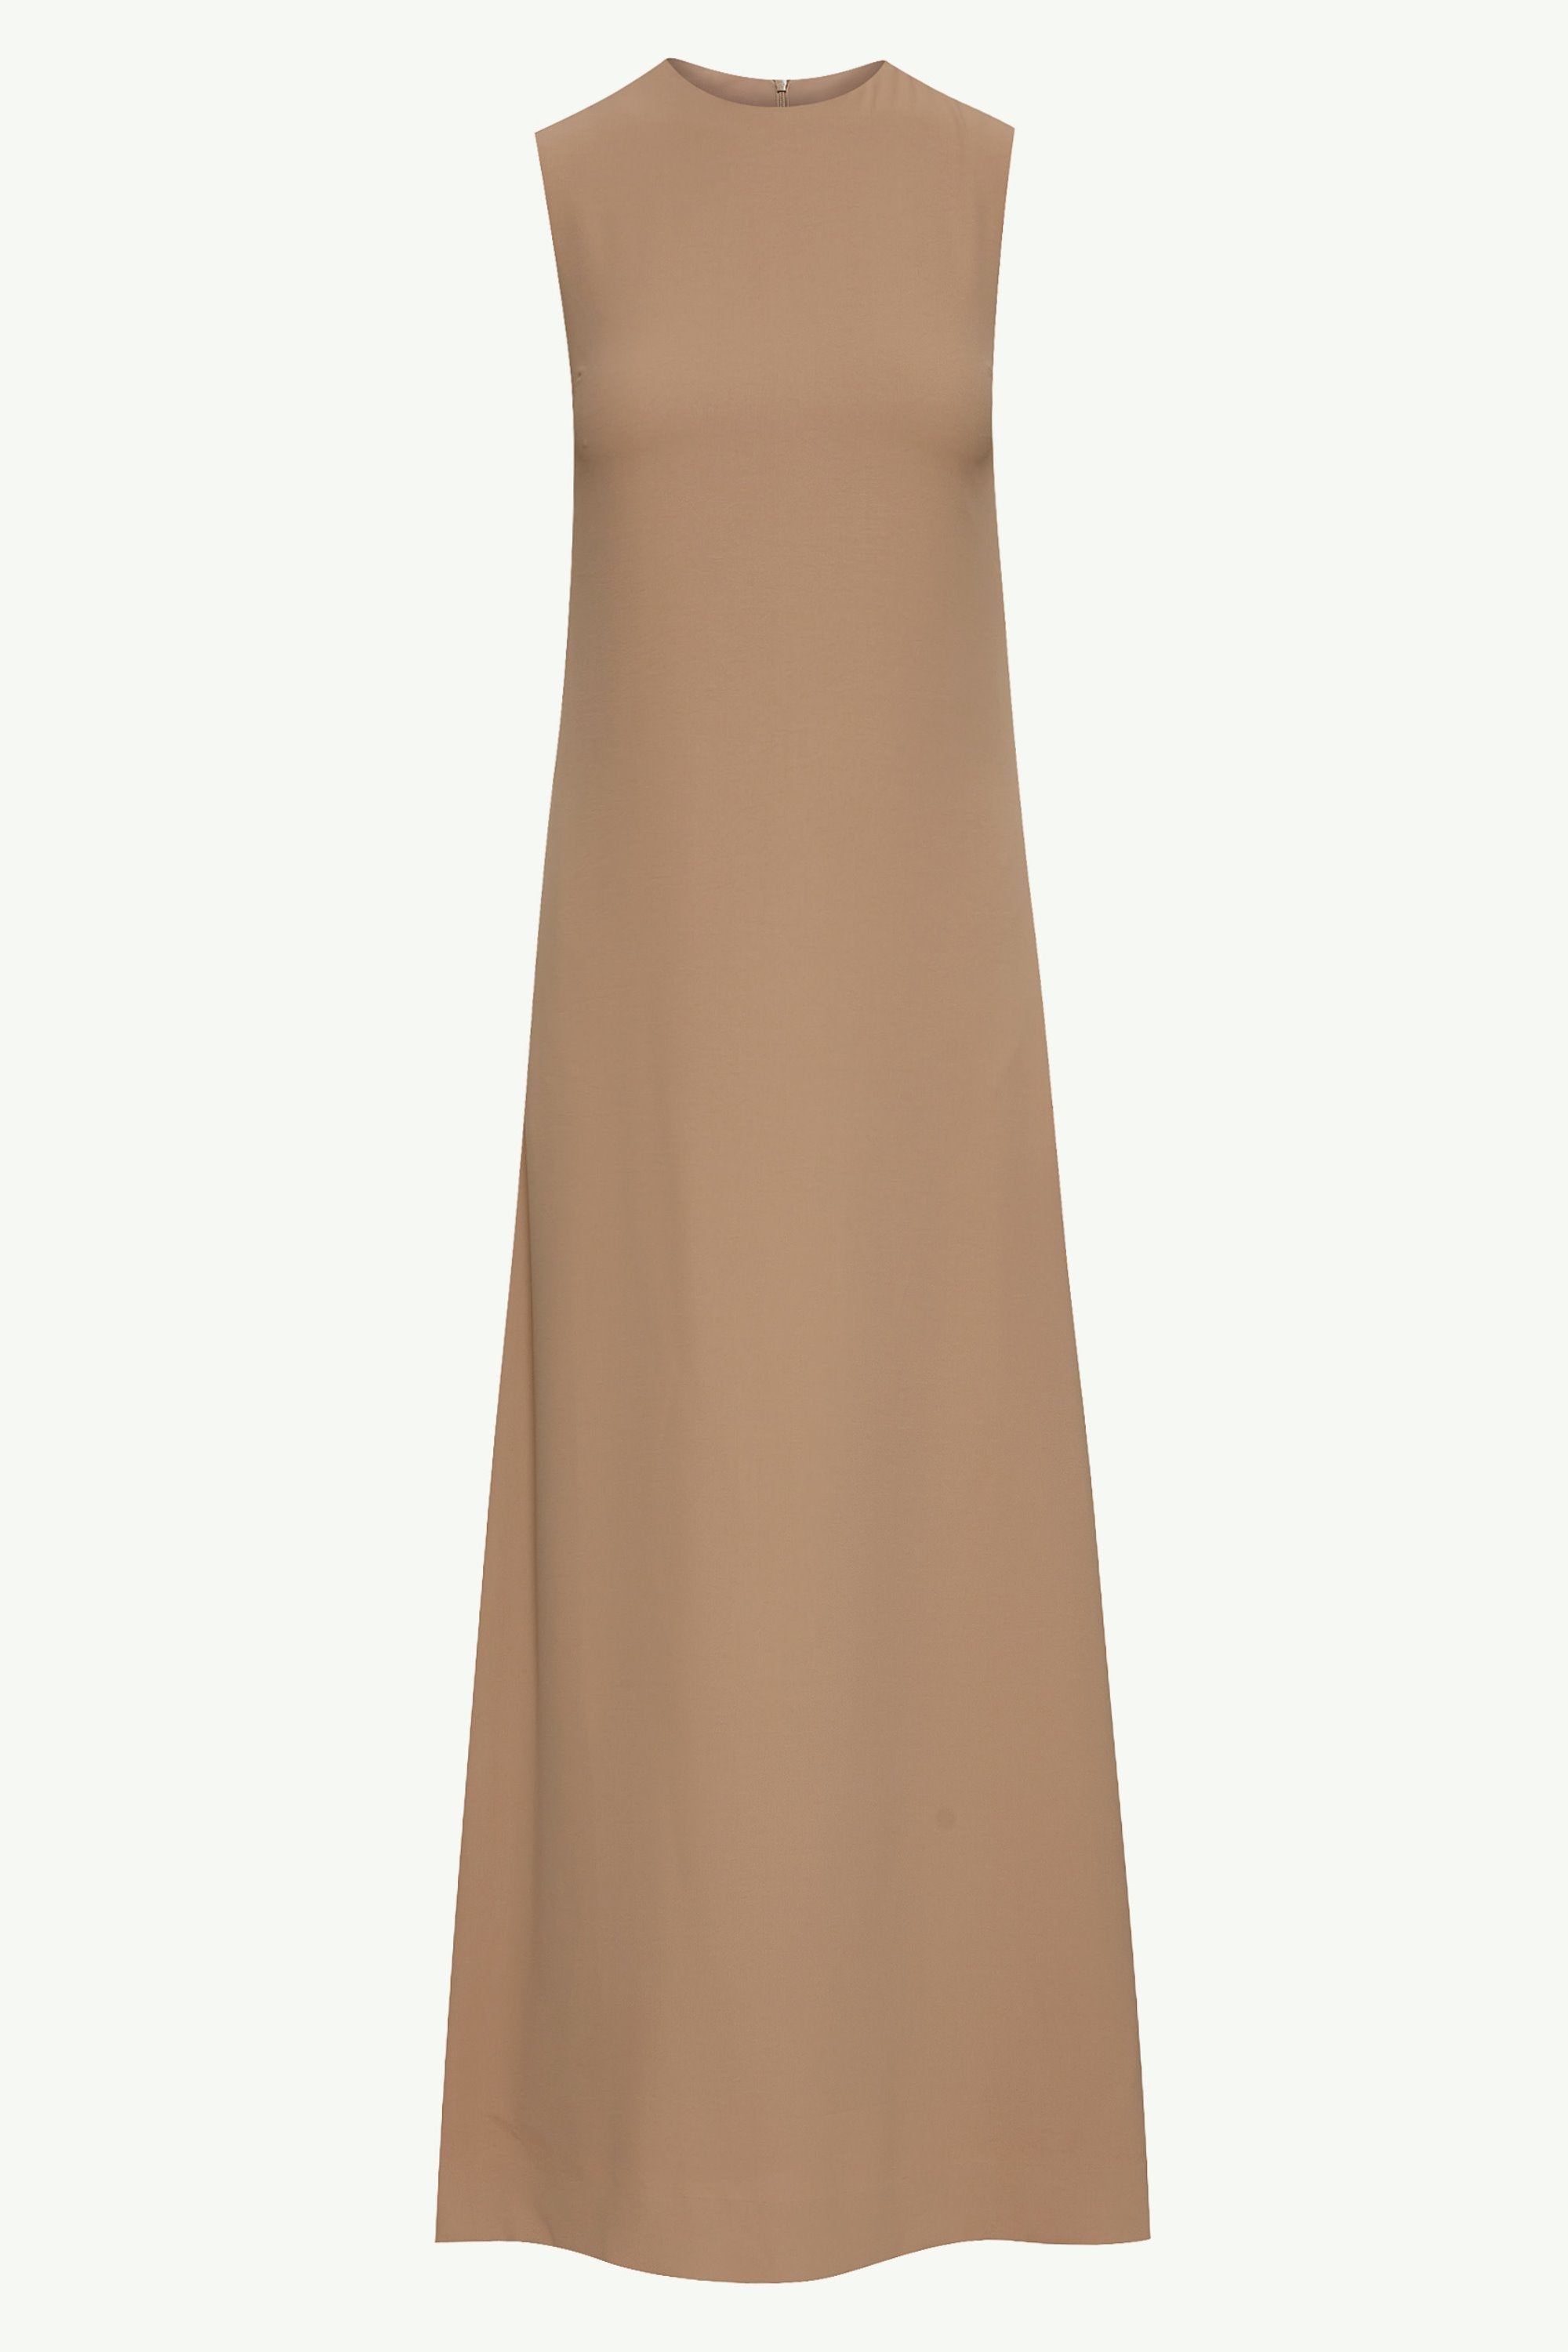 Essential Sleeveless Maxi Slip Dress - Caffe Clothing Veiled 